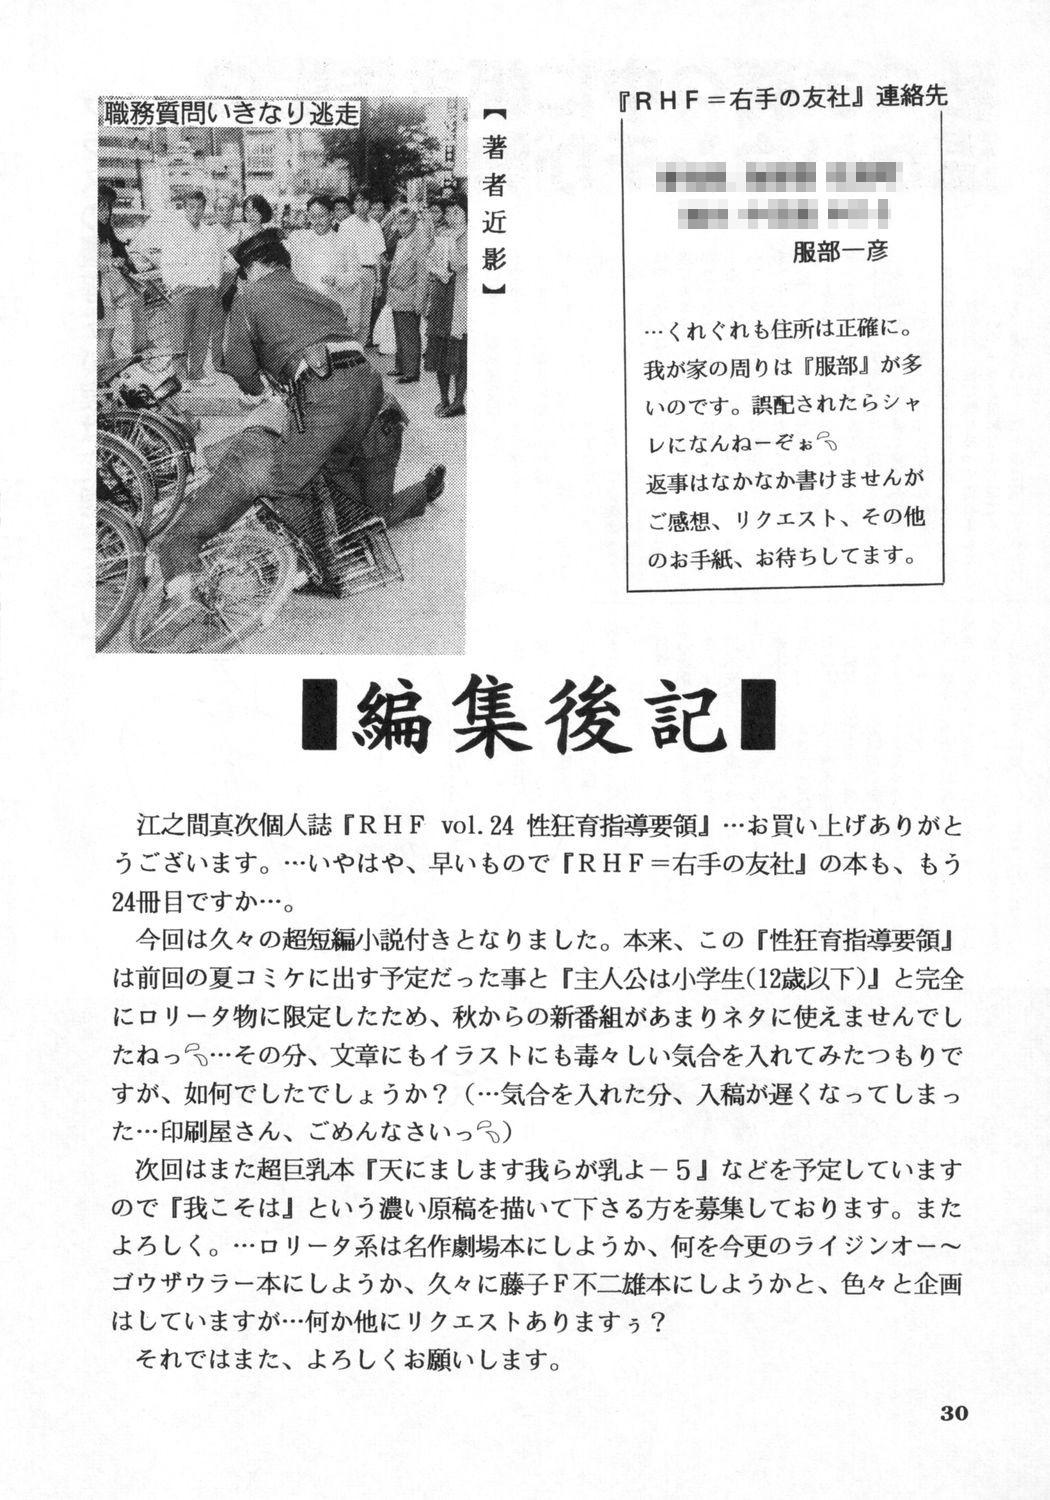 Load RHF vol.24 Seikyouiku Shidouyouryou - Sailor moon World masterpiece theater Whores - Page 29